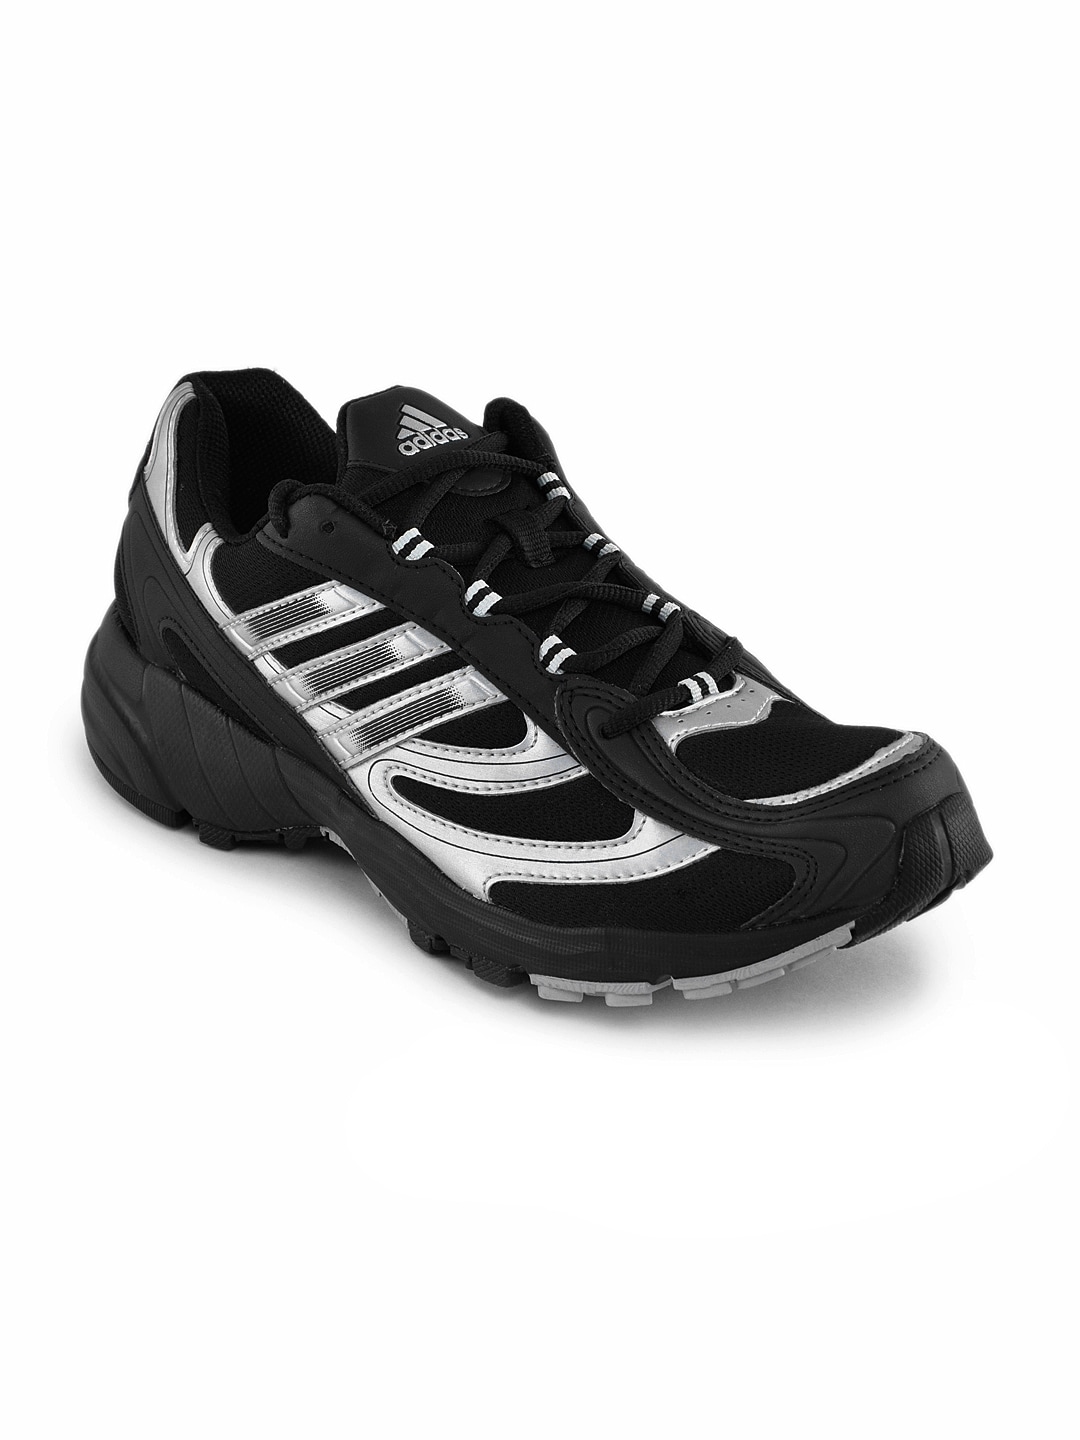 ADIDAS Men Black Vanquish Sports Shoes